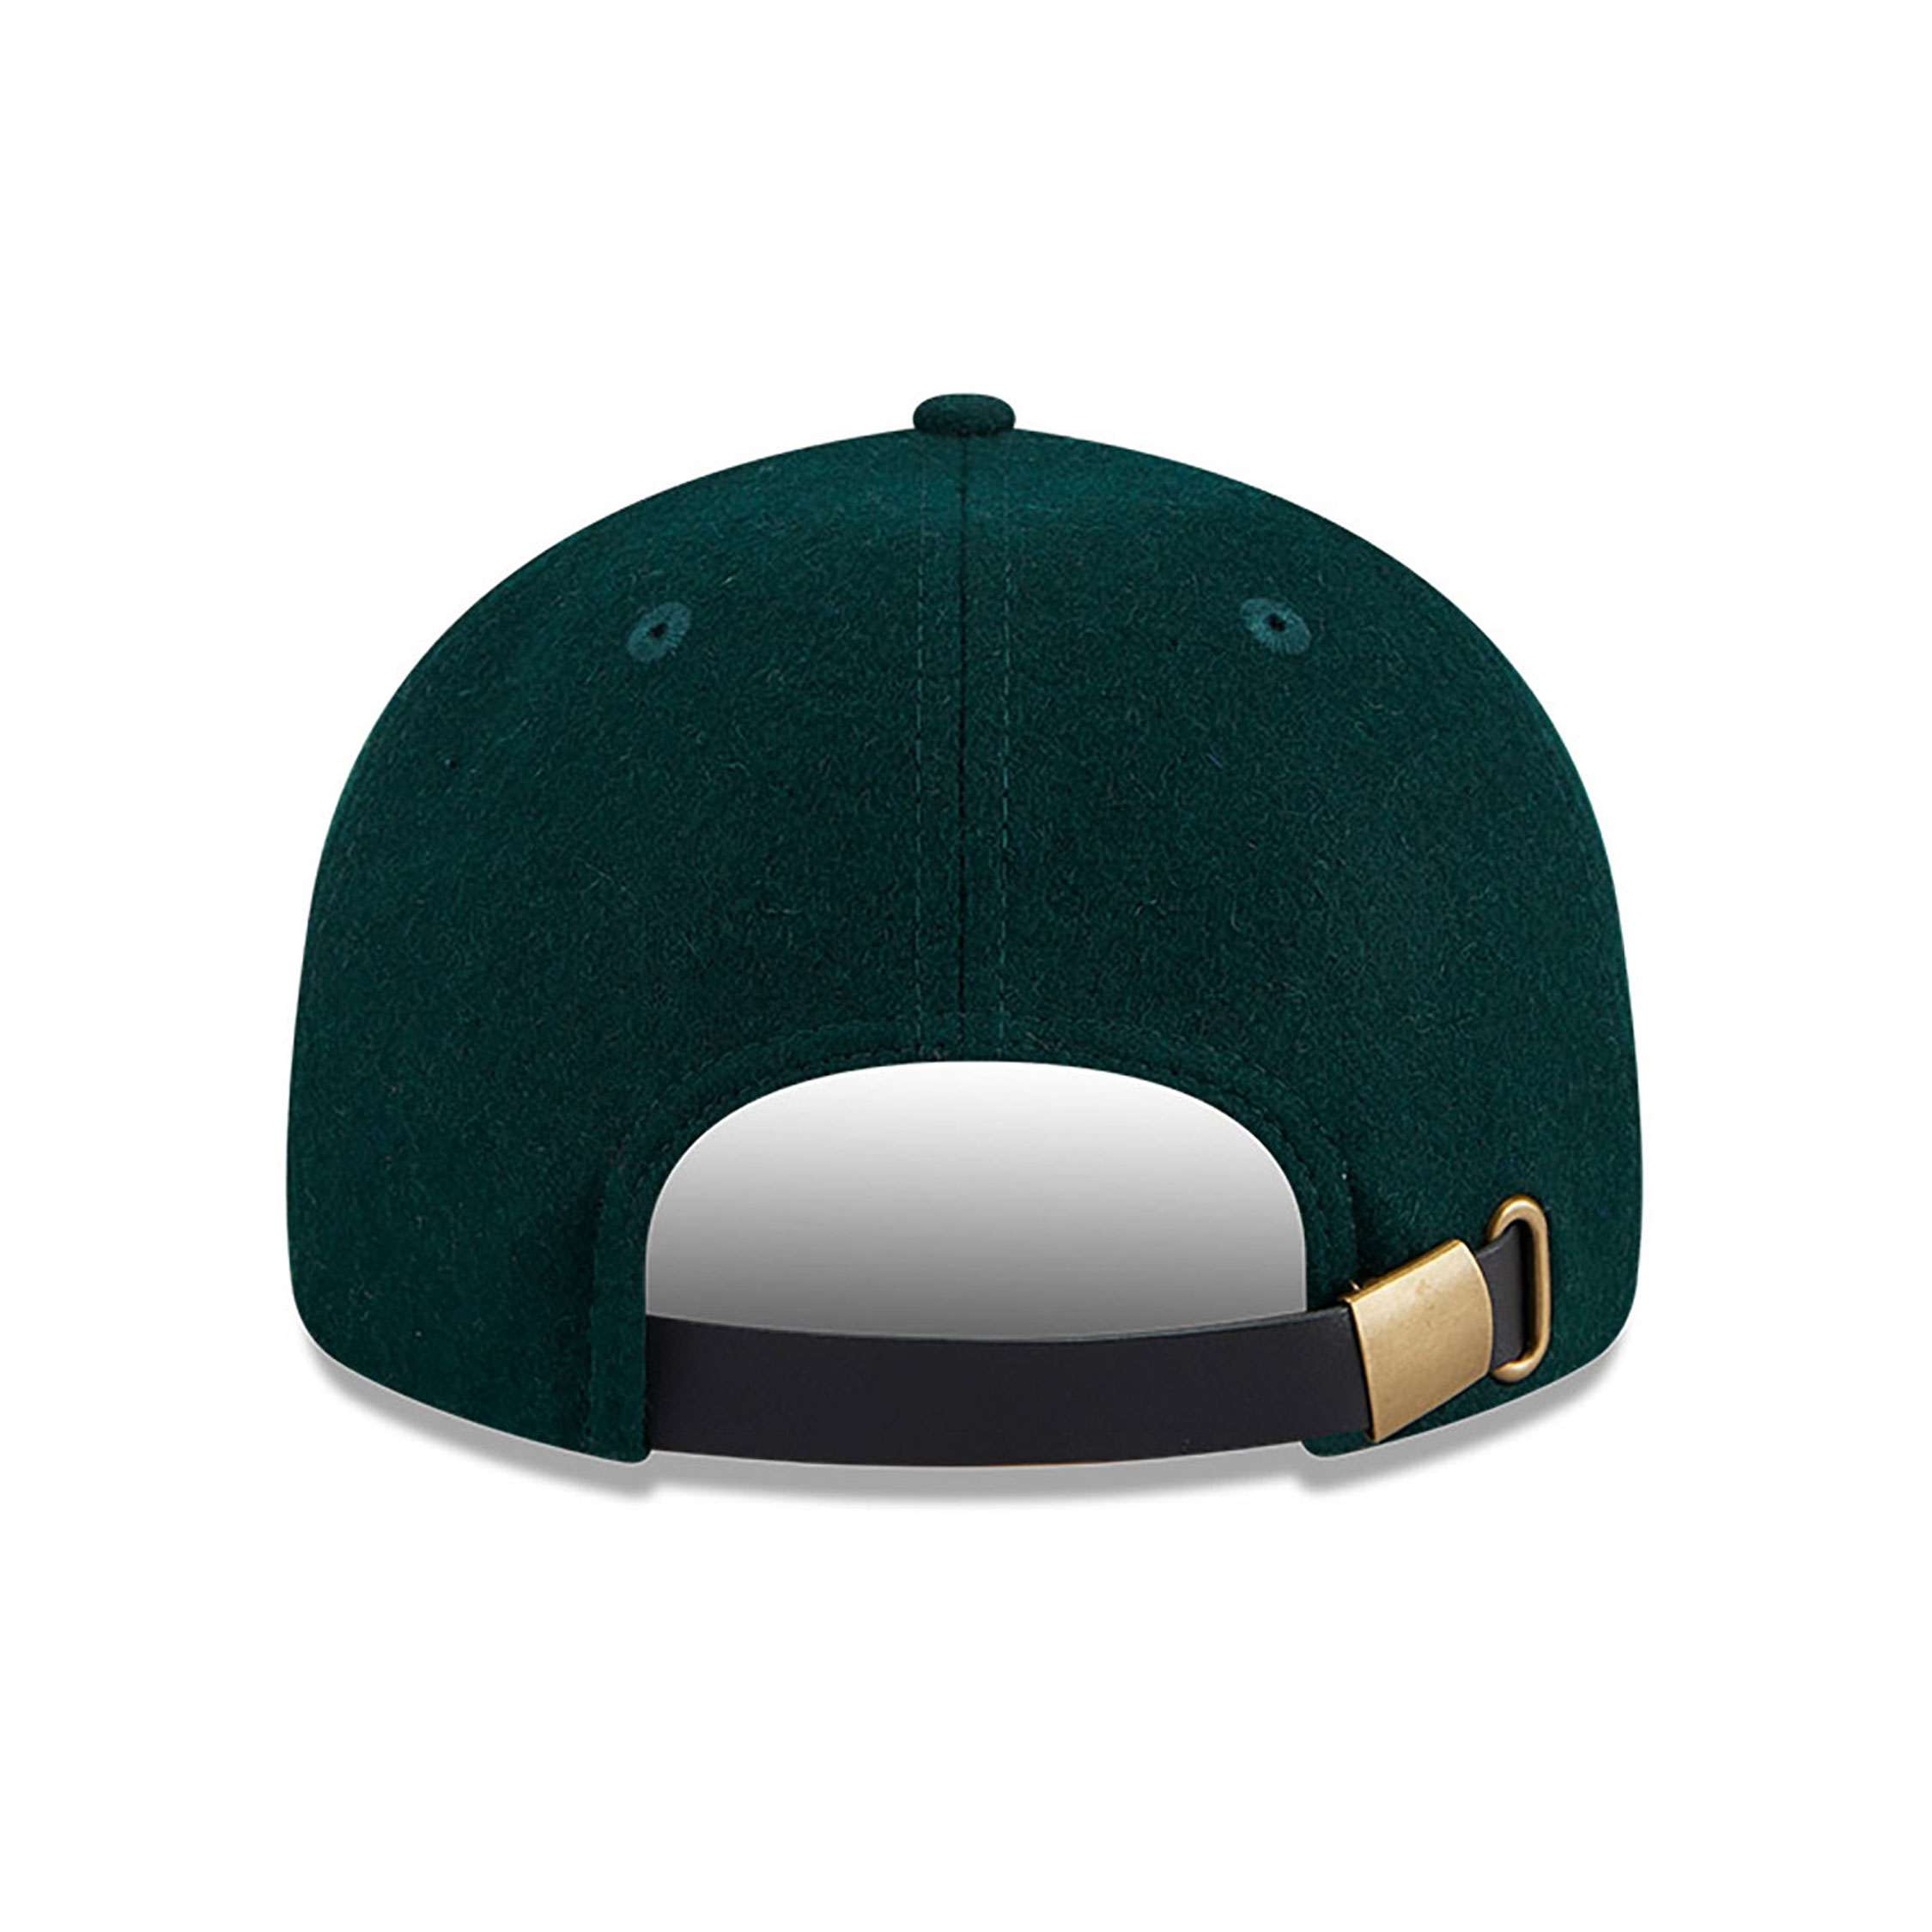 Oakland Athletics Melton Wool Dark Green Retro Crown 9FIFTY Strapback Cap